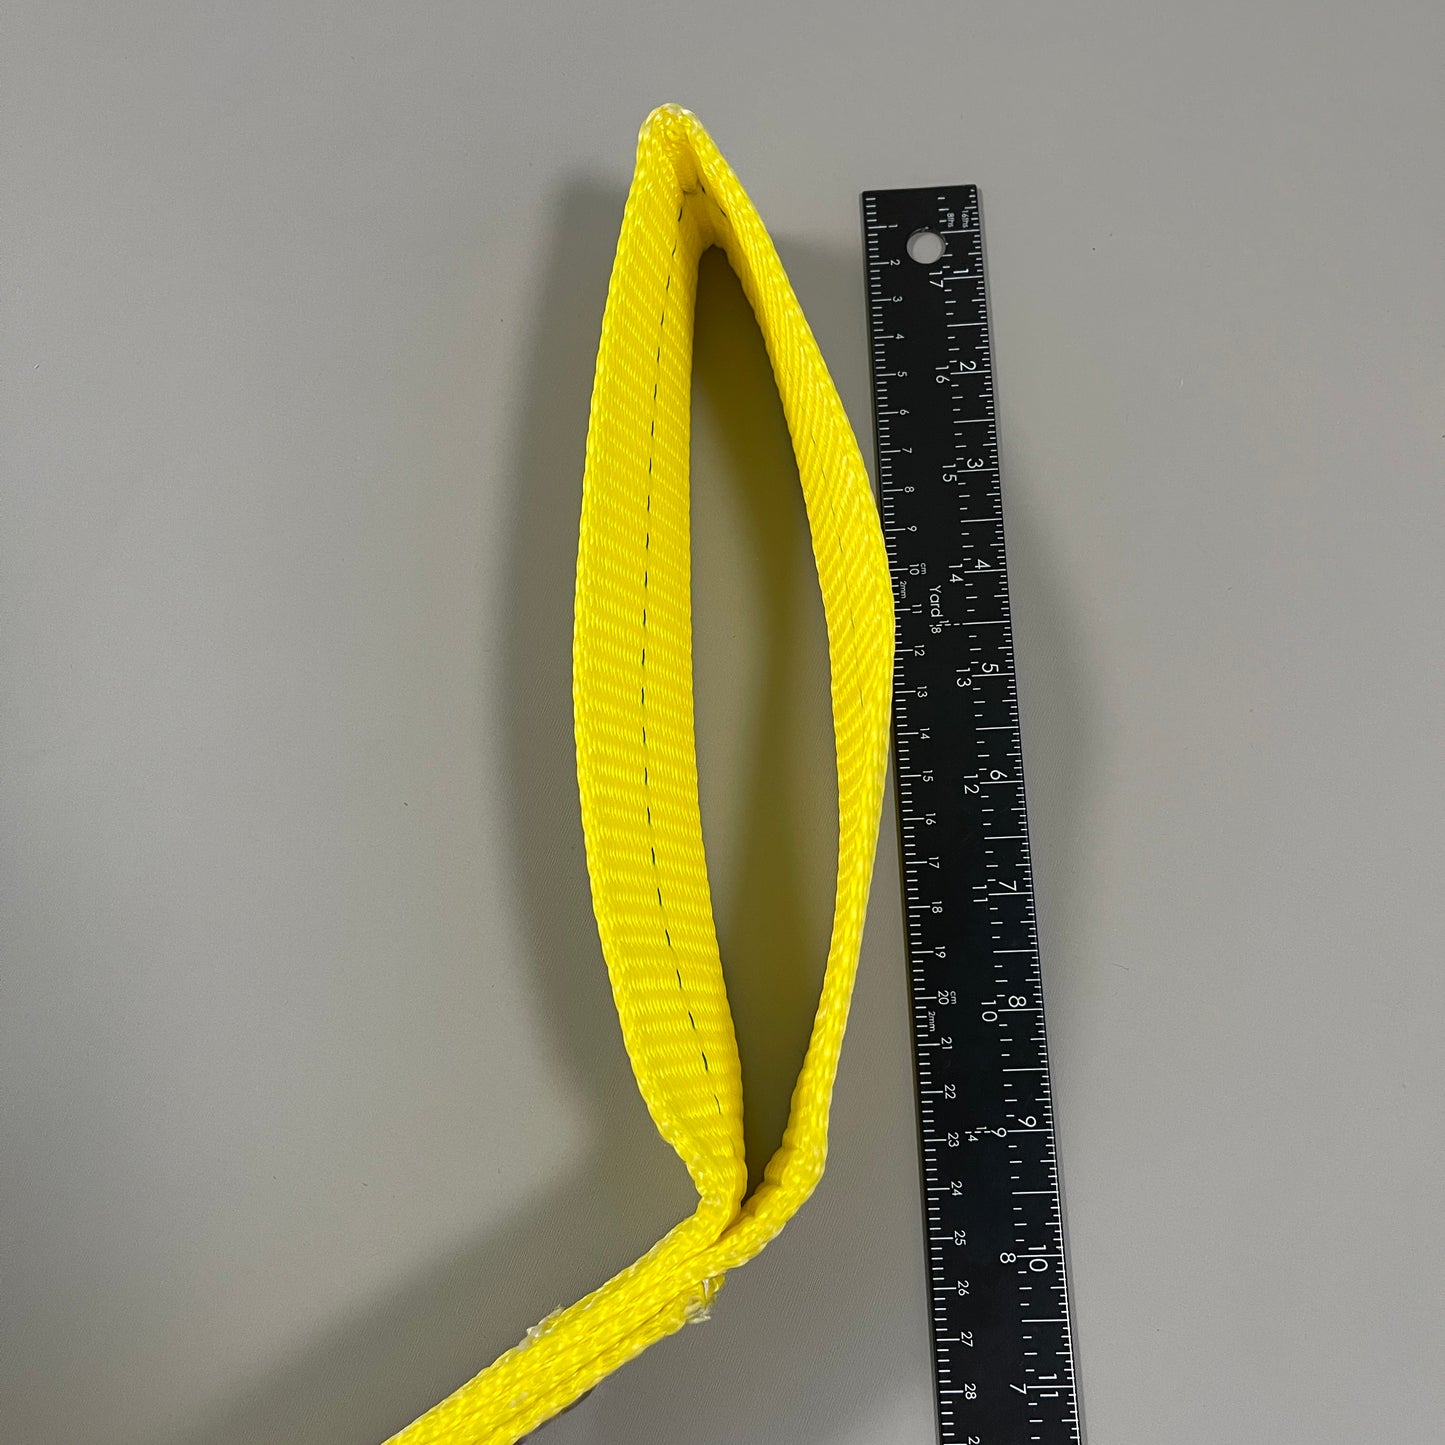 RIGGING SOLUTIONS Heavy Duty Rigging Strap Eye-to-Eye 2" Nylon Yellow (New)